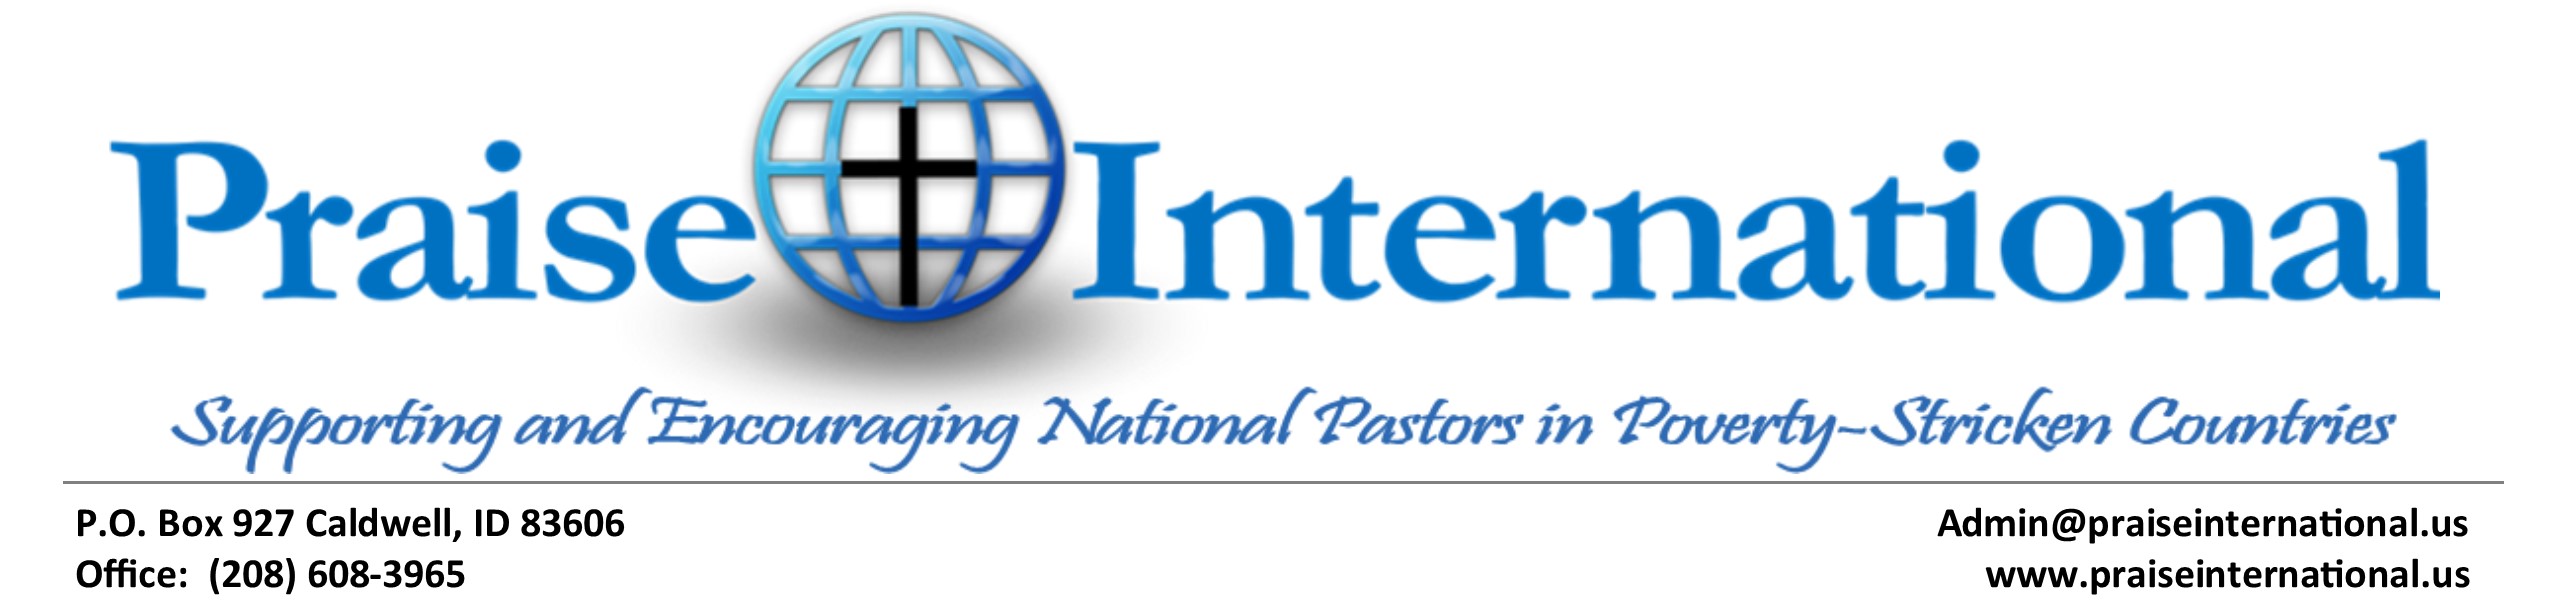 Praise International logo with address footer